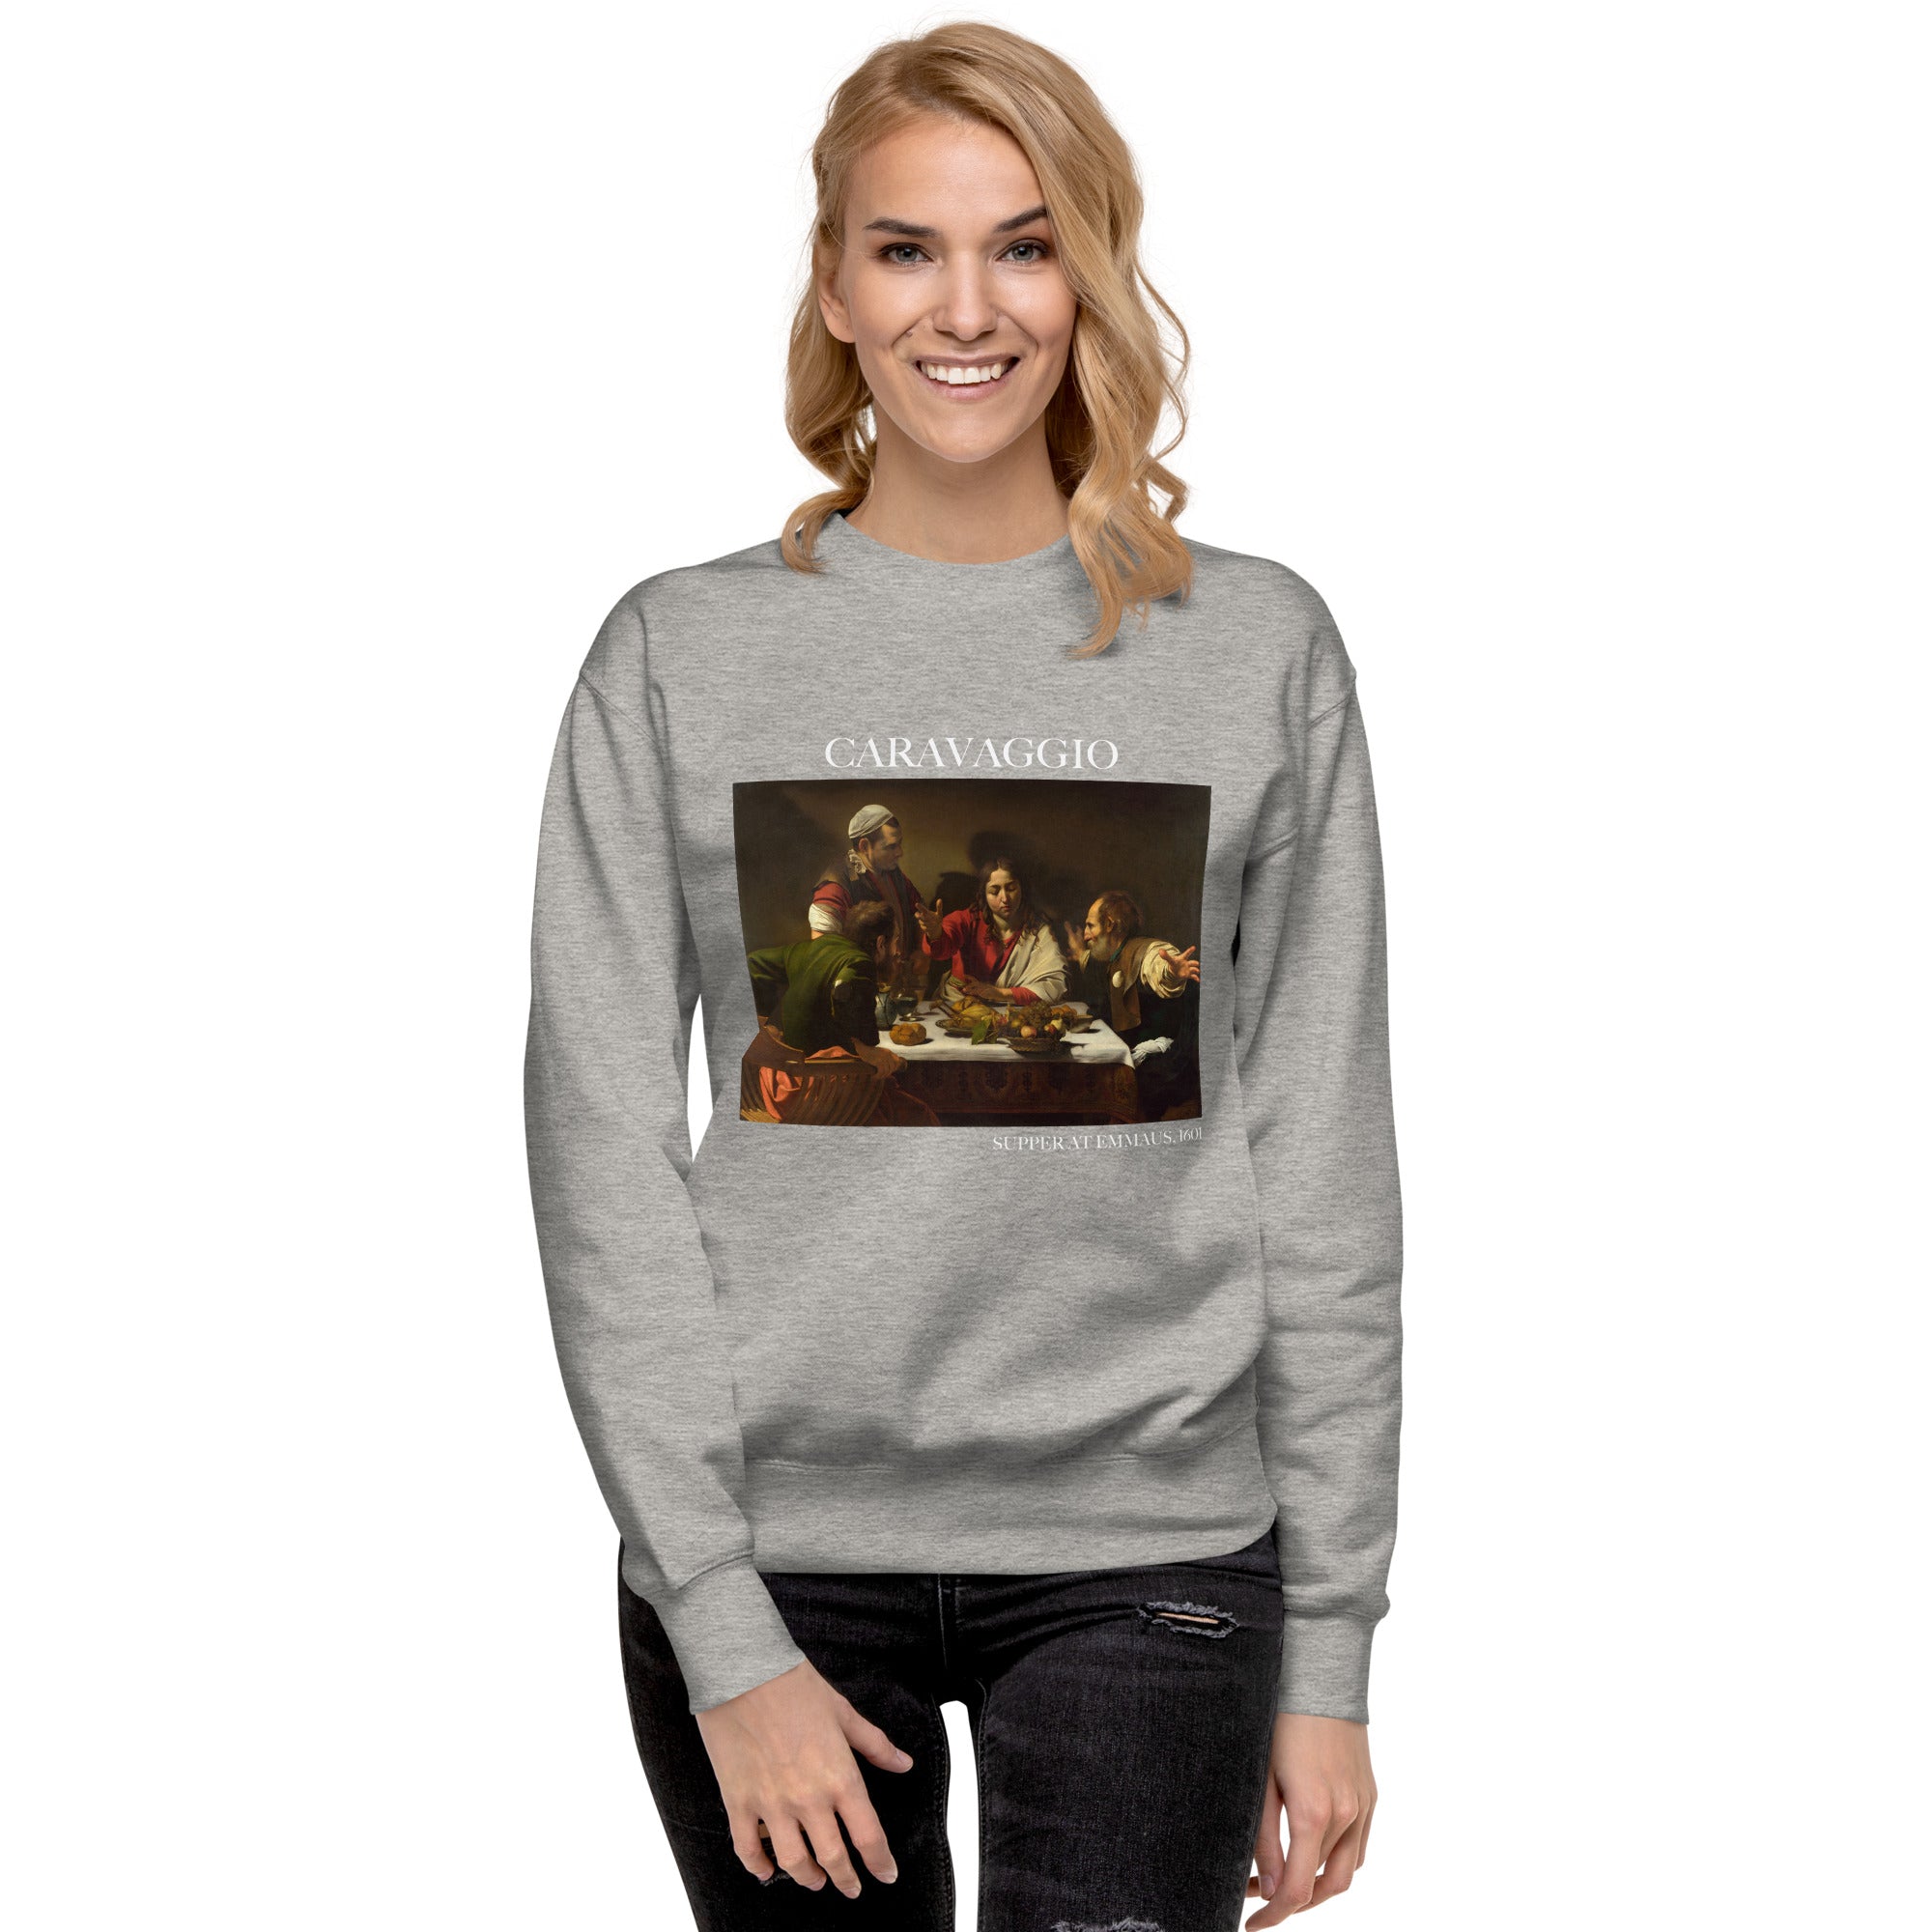 Caravaggio 'Supper at Emmaus' Famous Painting Sweatshirt | Unisex Premium Sweatshirt